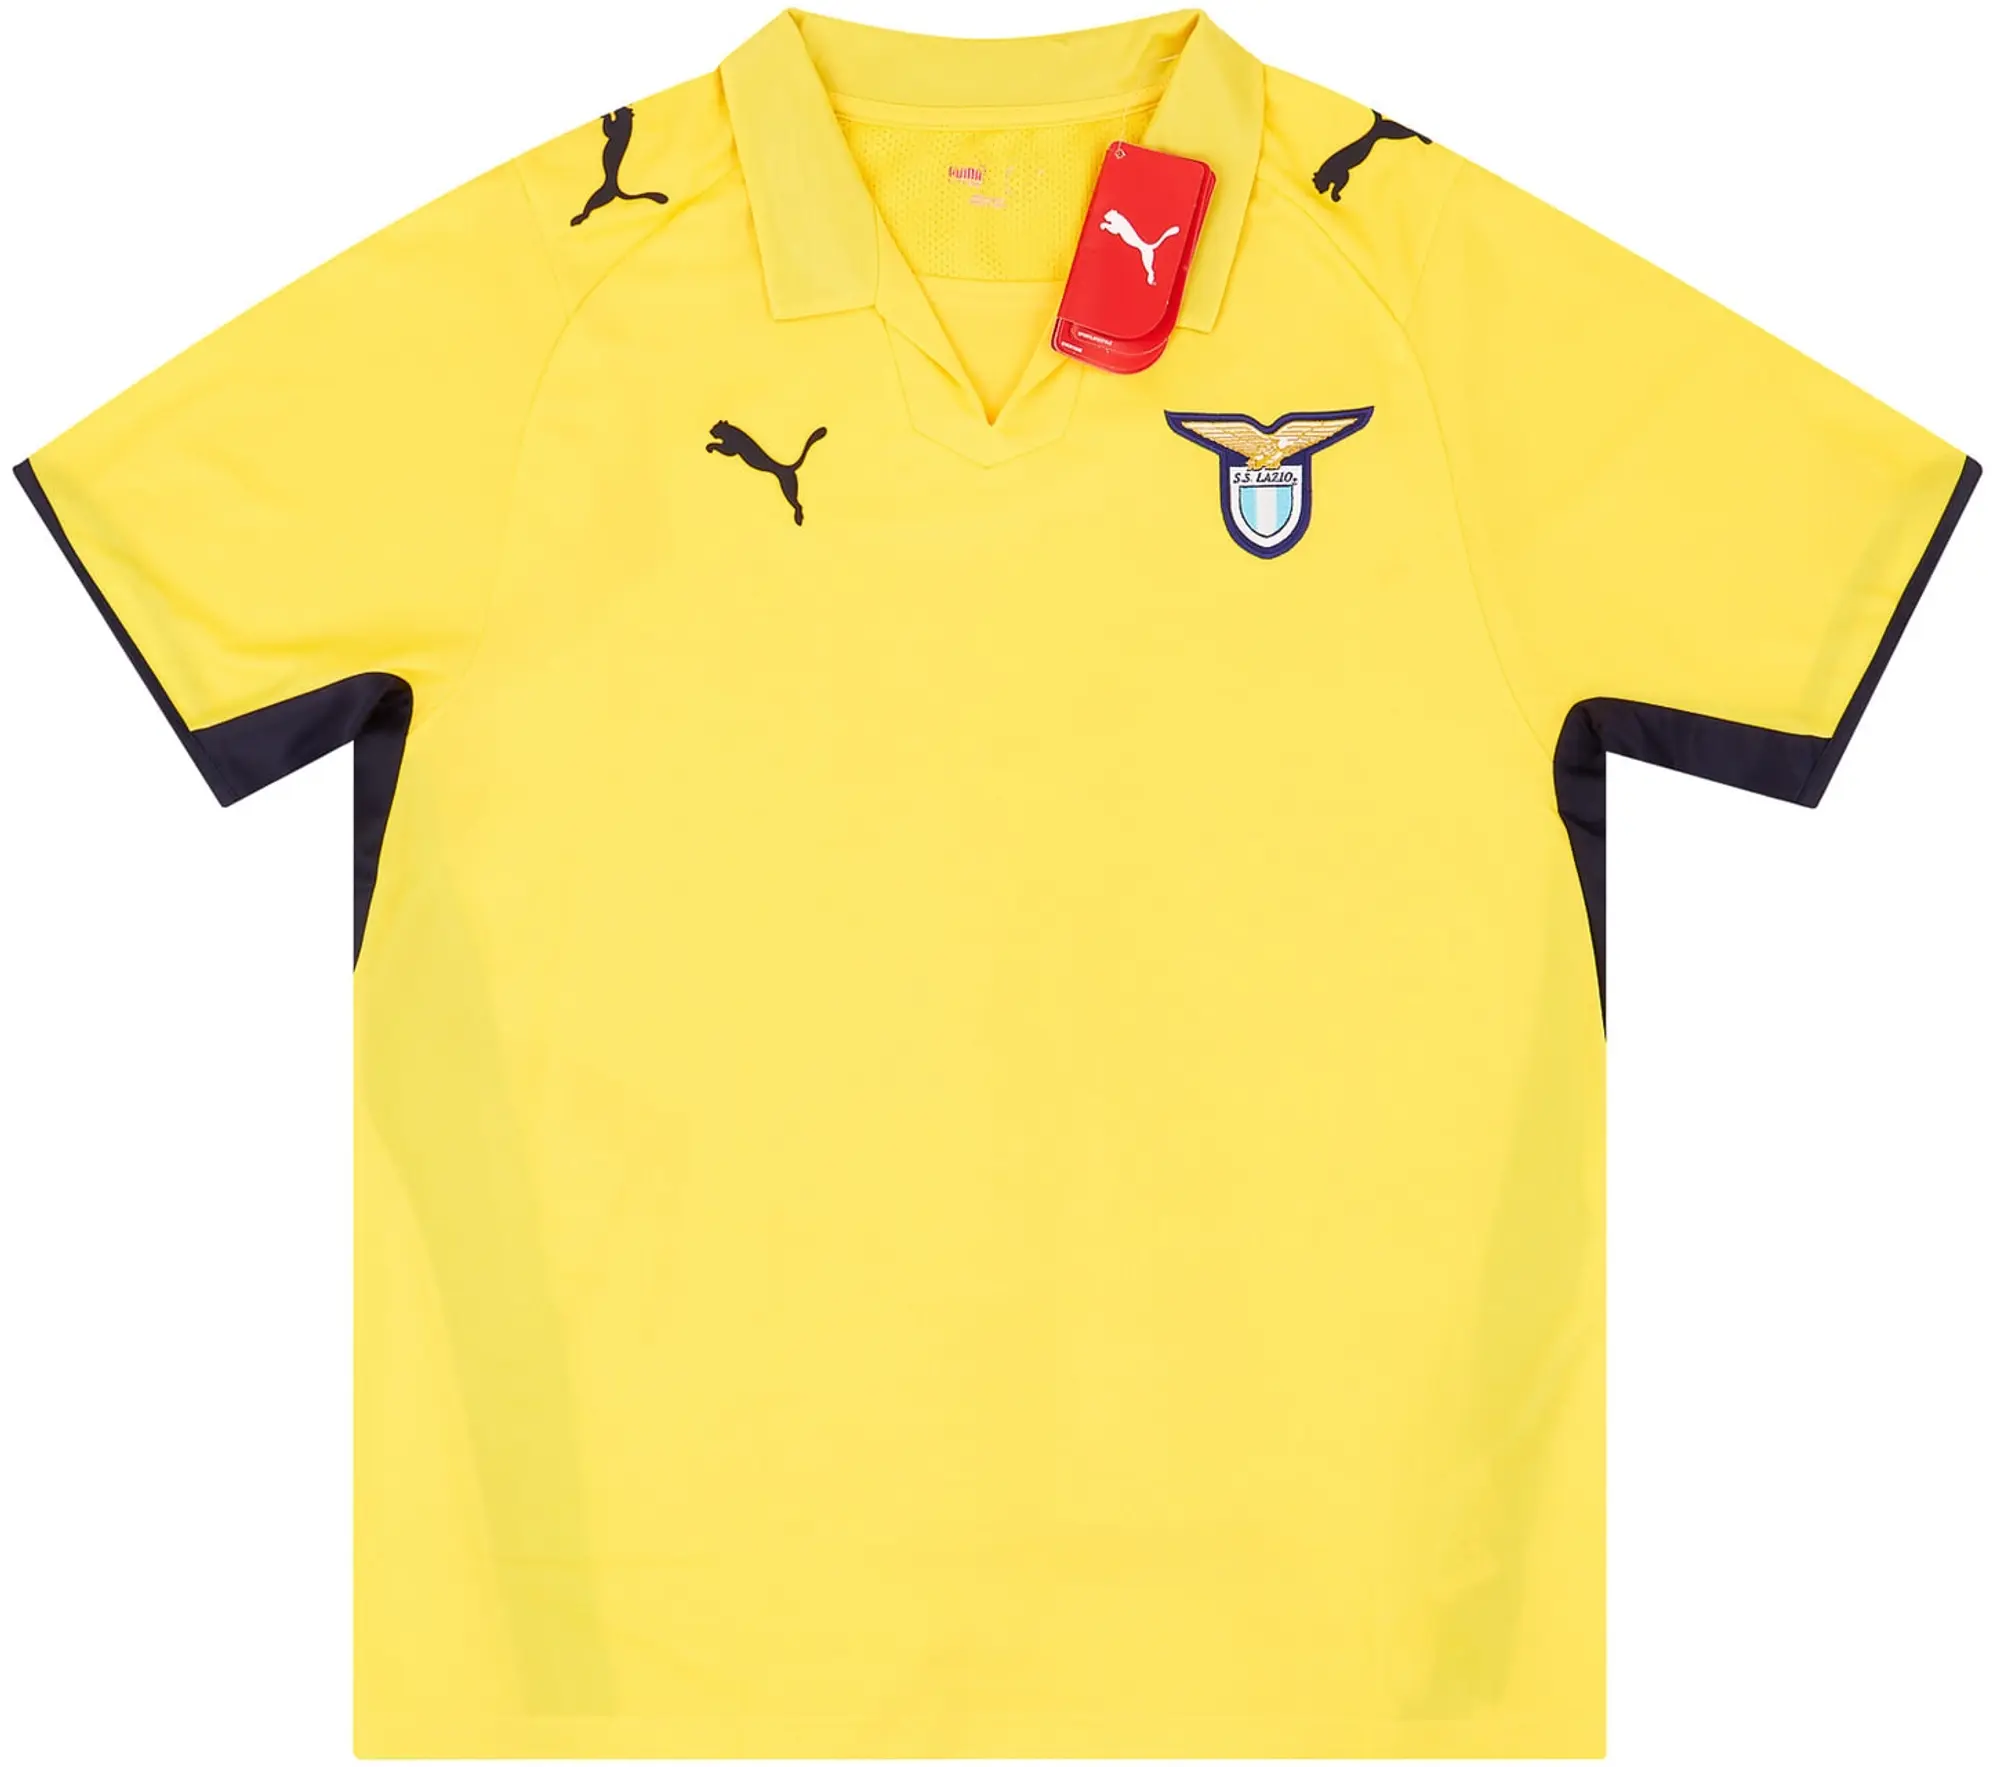 Puma Lazio Mens SS Away Shirt 2008/09